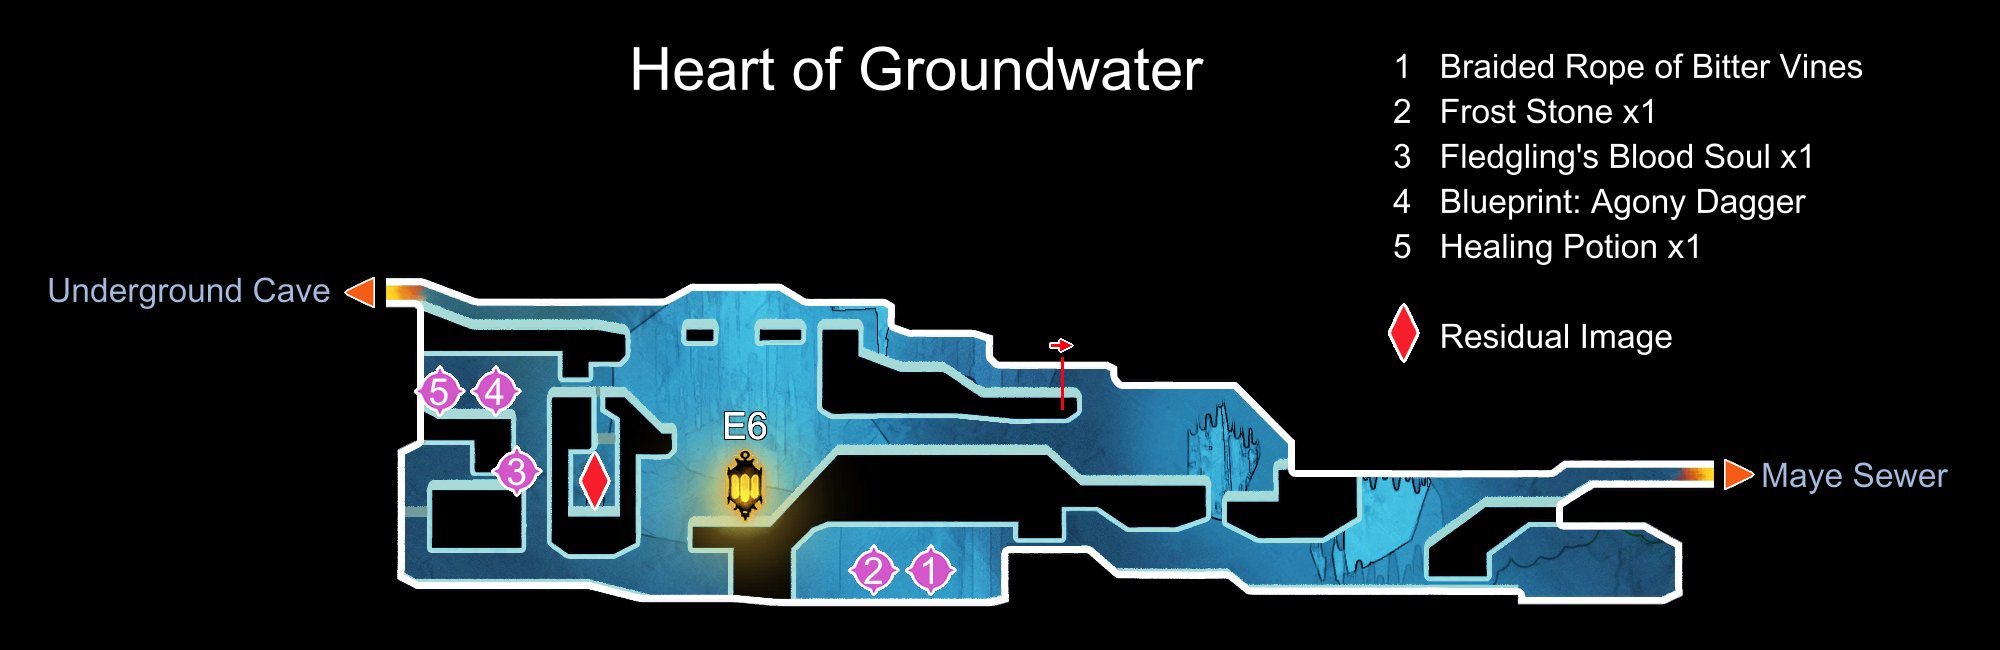 heart of groundwater map vigiltln wiki